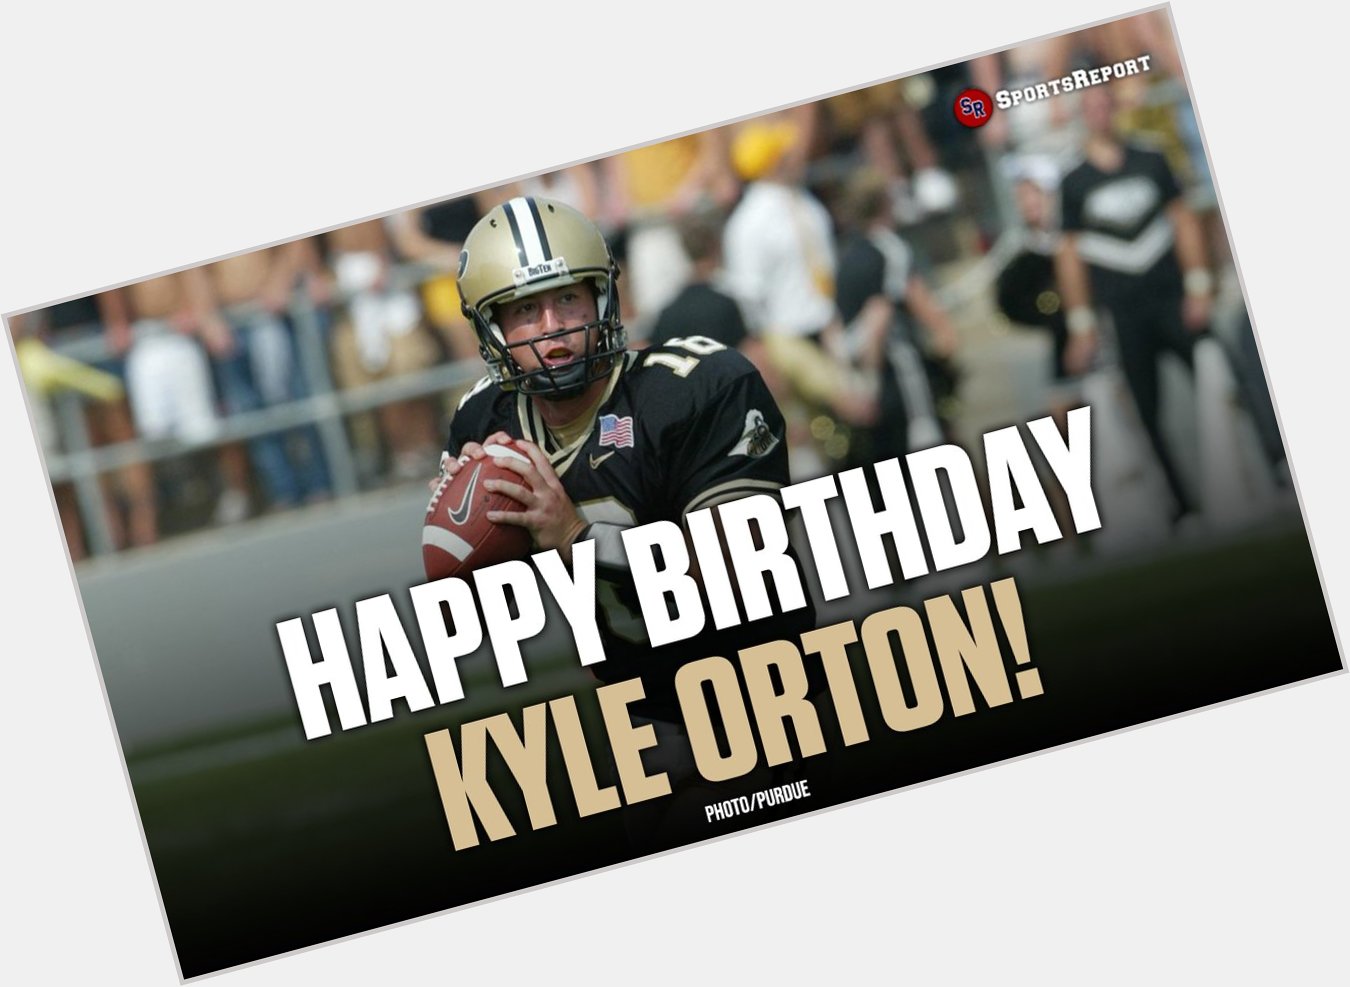  Fans, let\s wish Kyle Orton a Happy Birthday! 